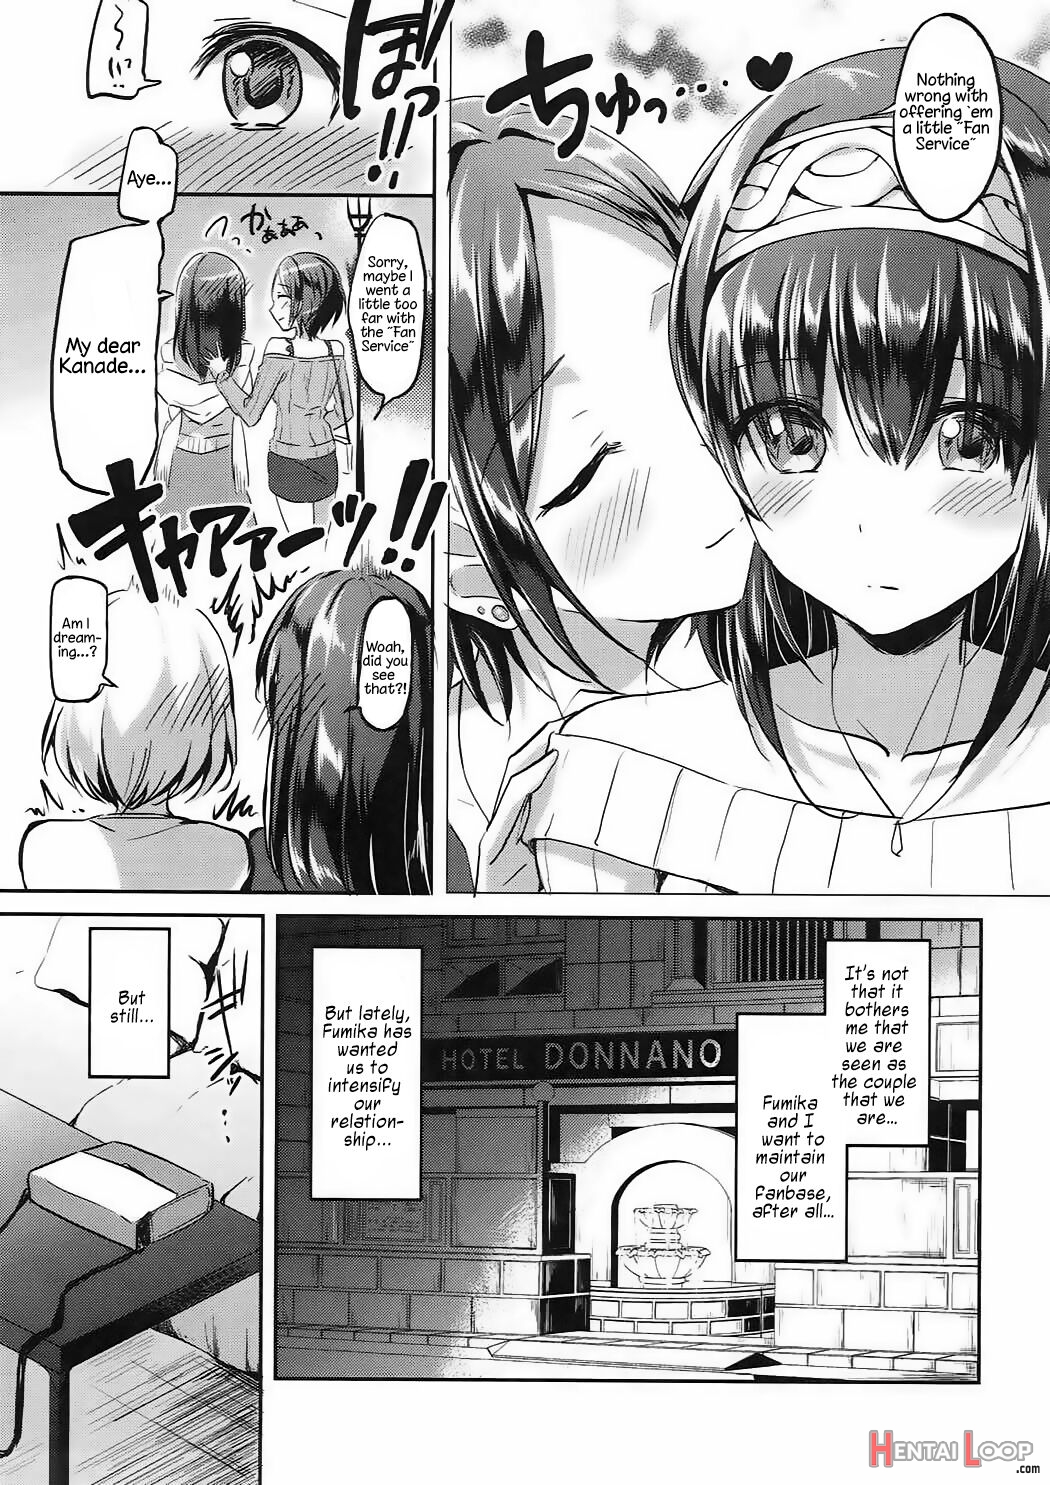 Secret Kiss page 4